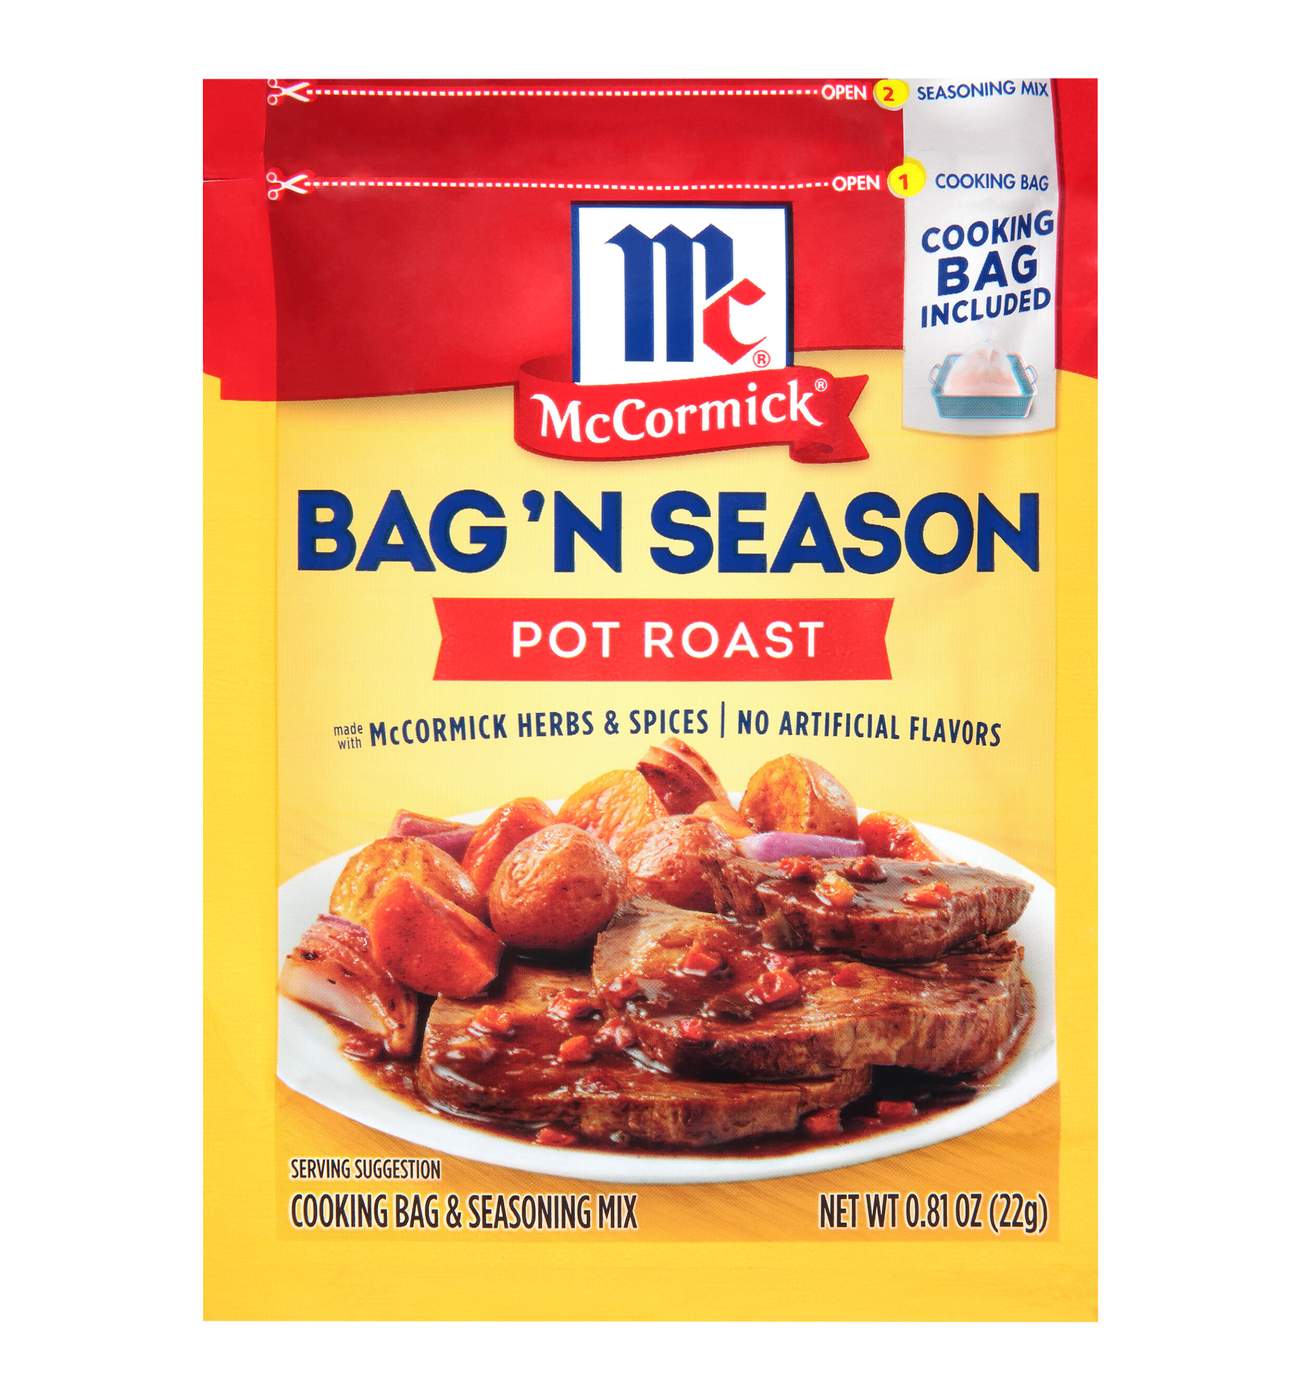 McCormick Bag 'n Season Pot Roast Cooking & Seasoning Mix; image 1 of 6